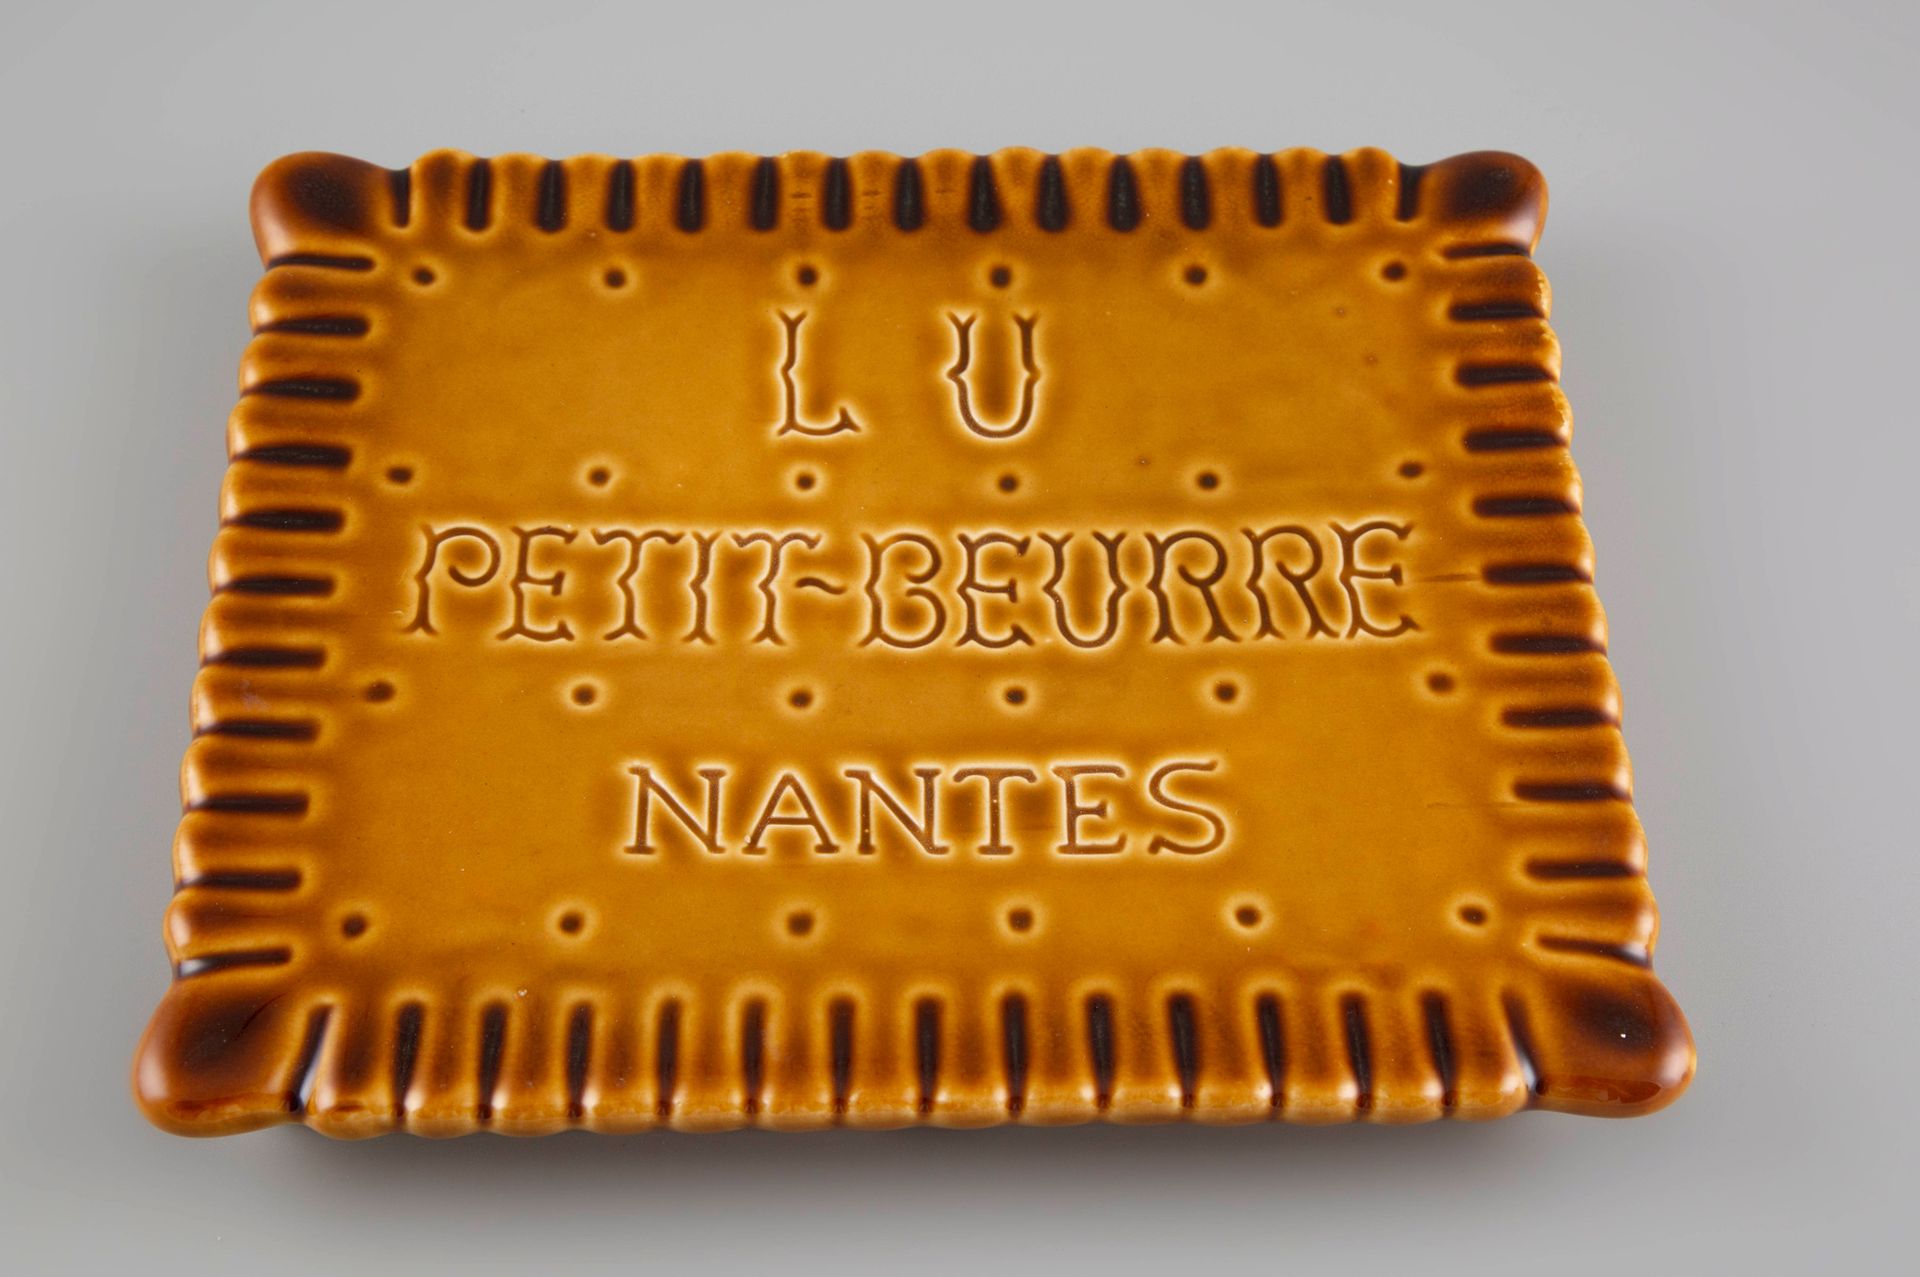 Null 
巴黎，乔治-德雷福斯出版社，Lu Petit-Beurre Nantes

表现一堆Petit-Beurre的陶瓷盒，采用的是叠加法。

背面的空心&hellip;